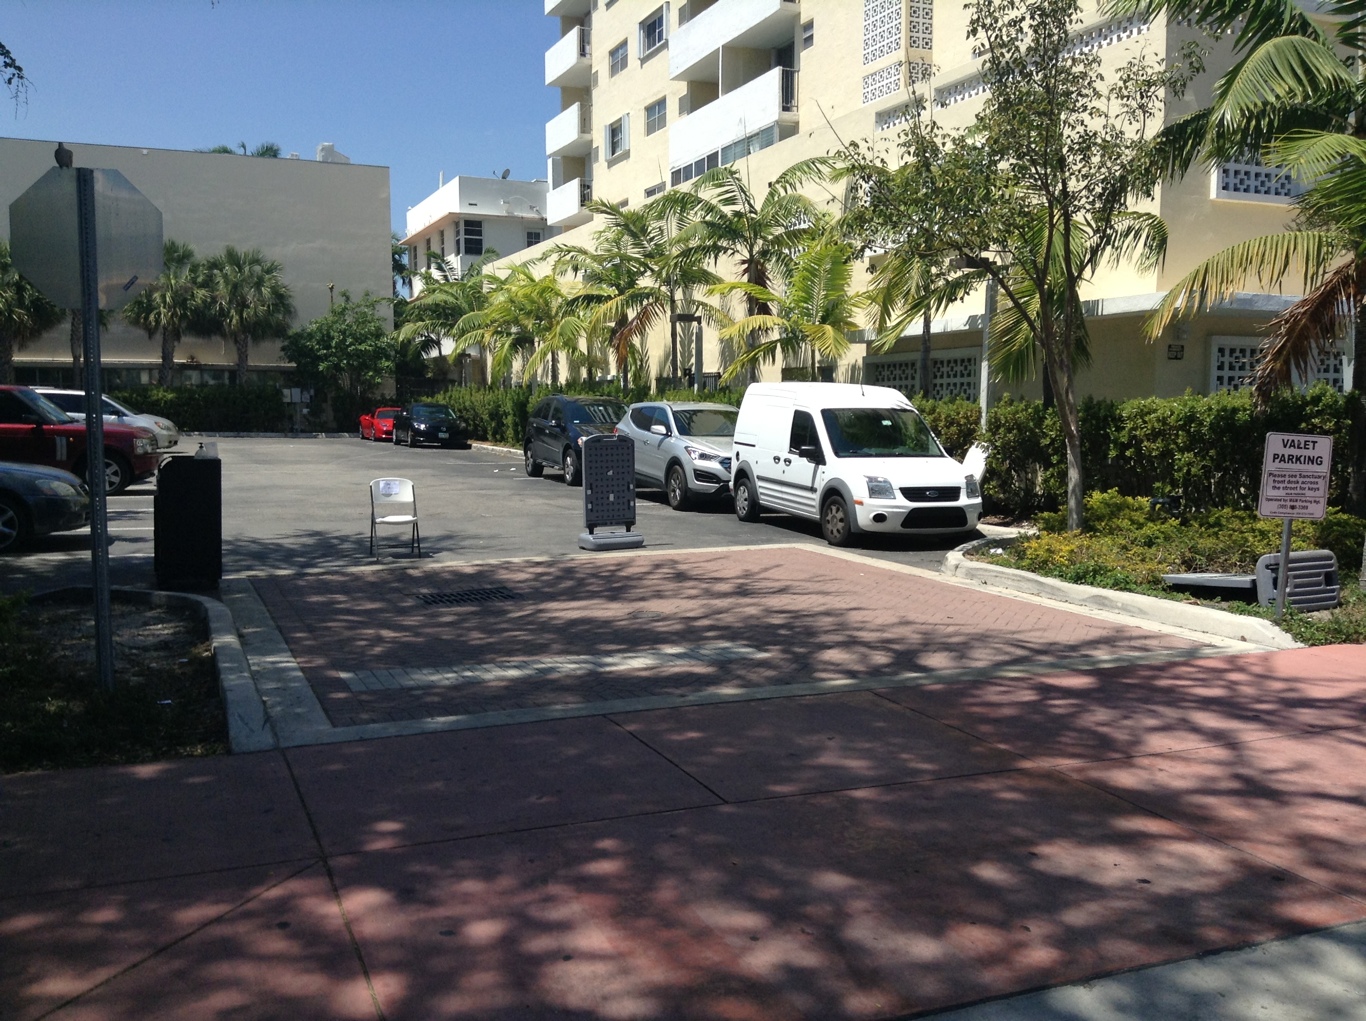 Miami Beach Parking - Find. Compare. Save.